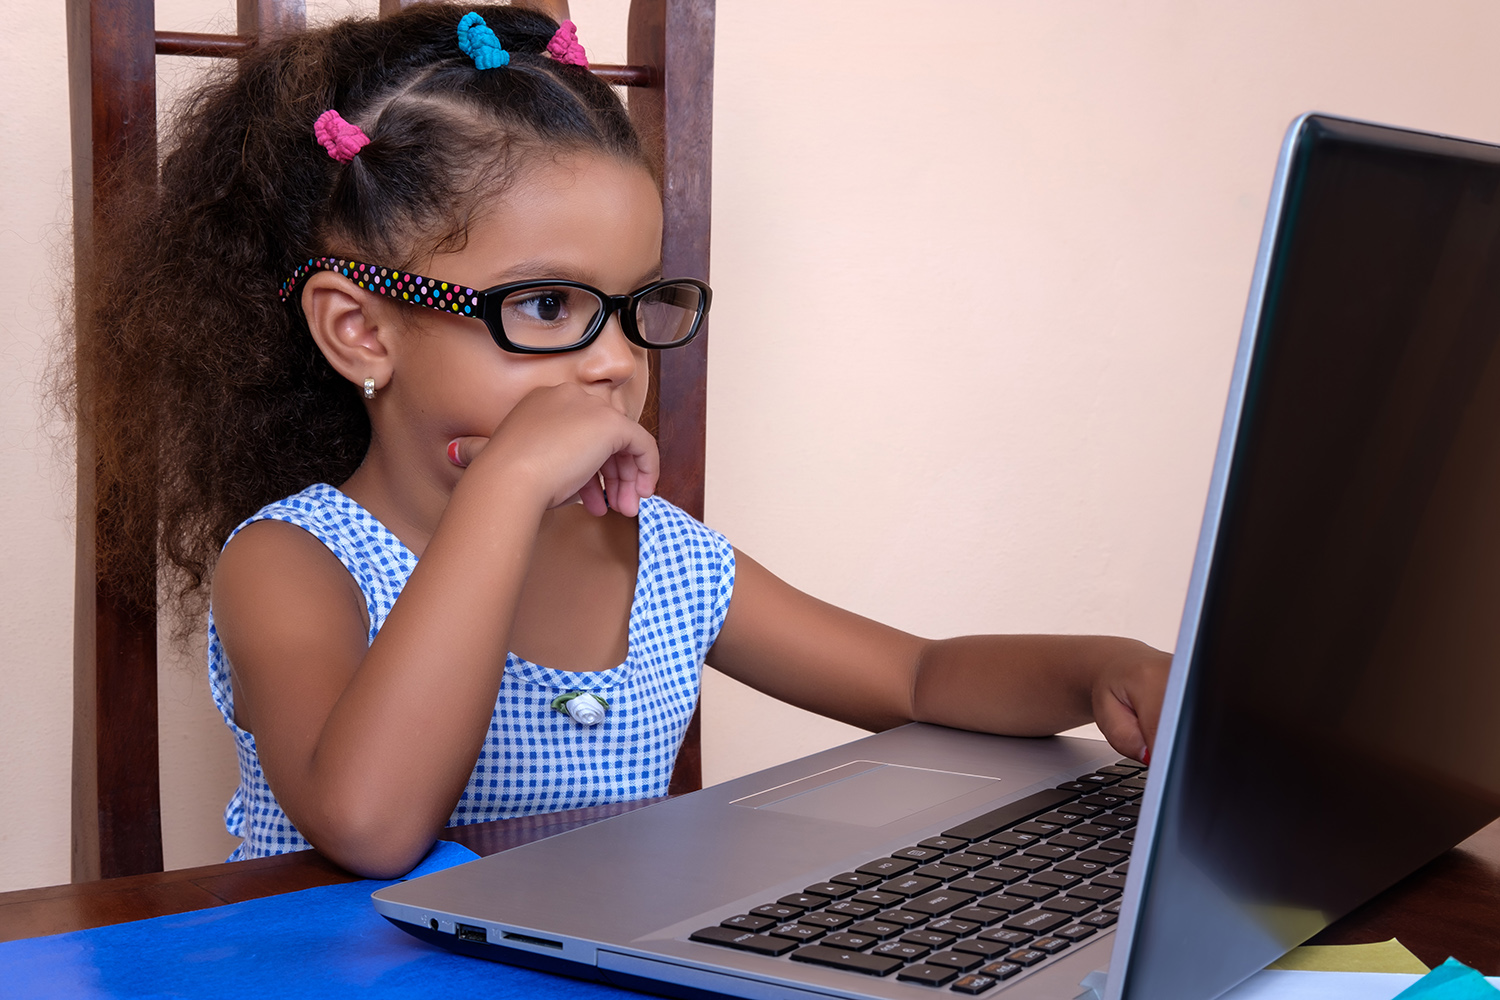 Young girl at a computer